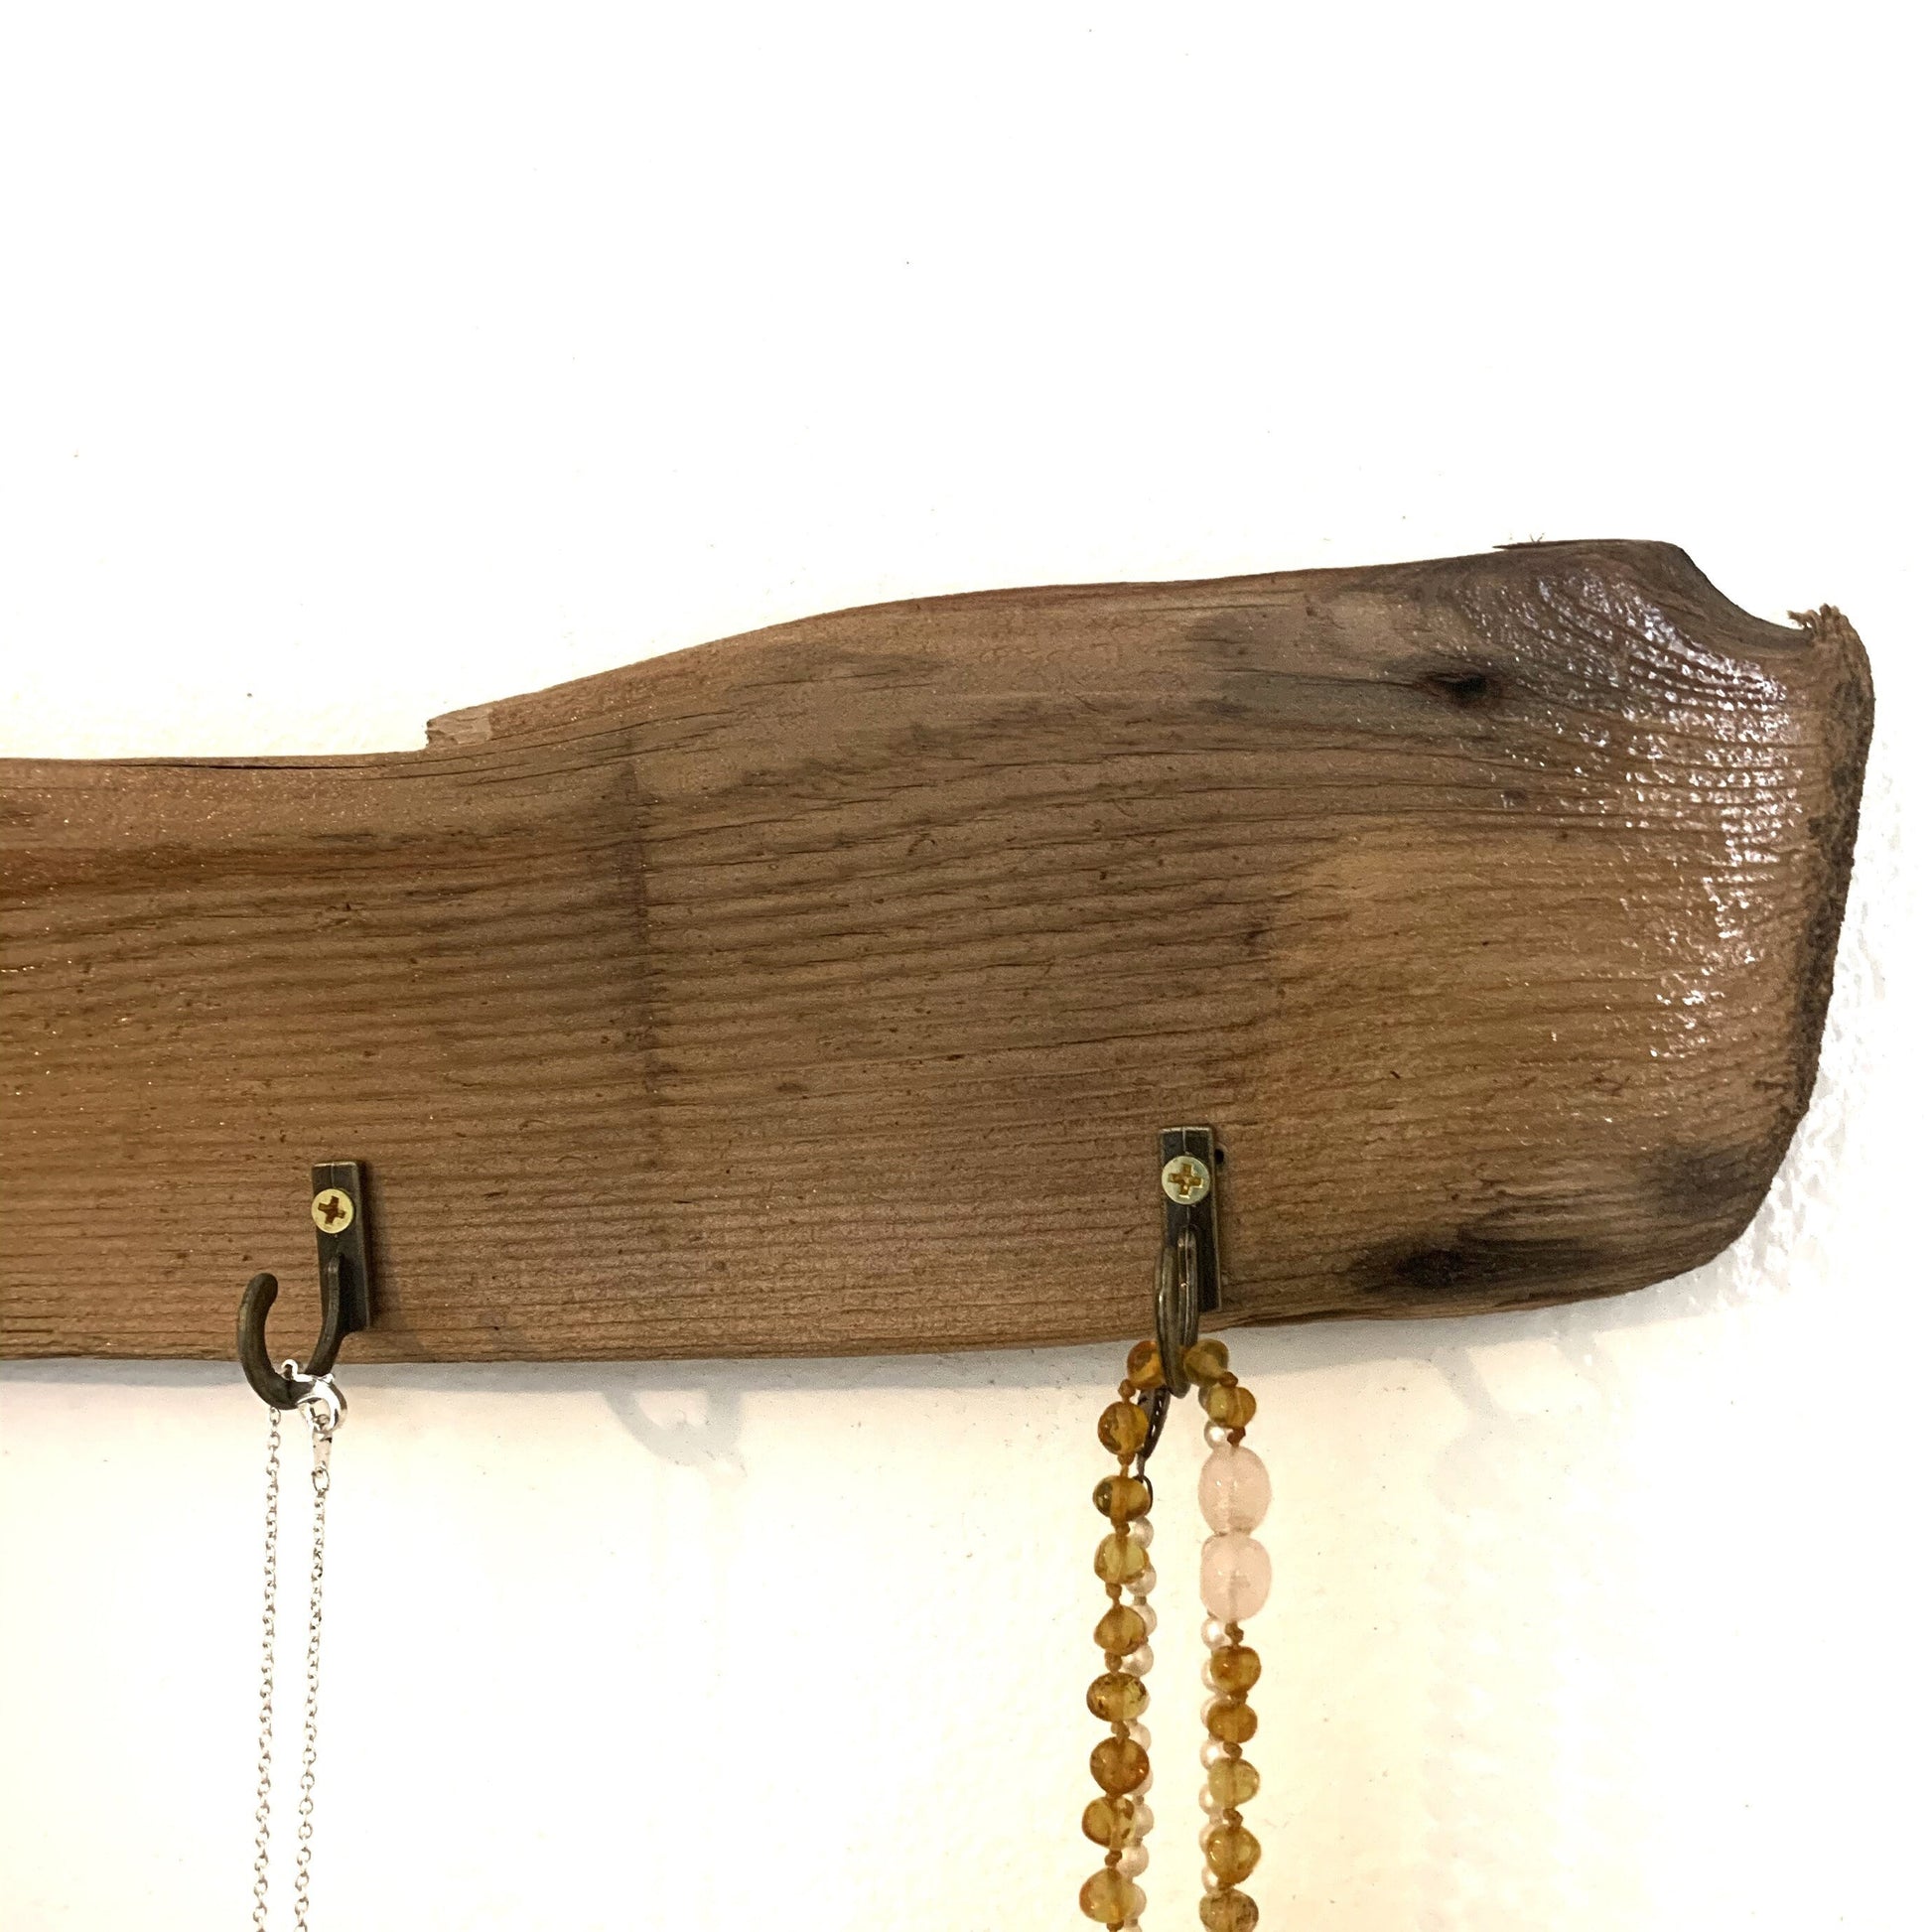 Jewelry hanger | key hanger |Reclaimed wood with bronze hooks - rituel